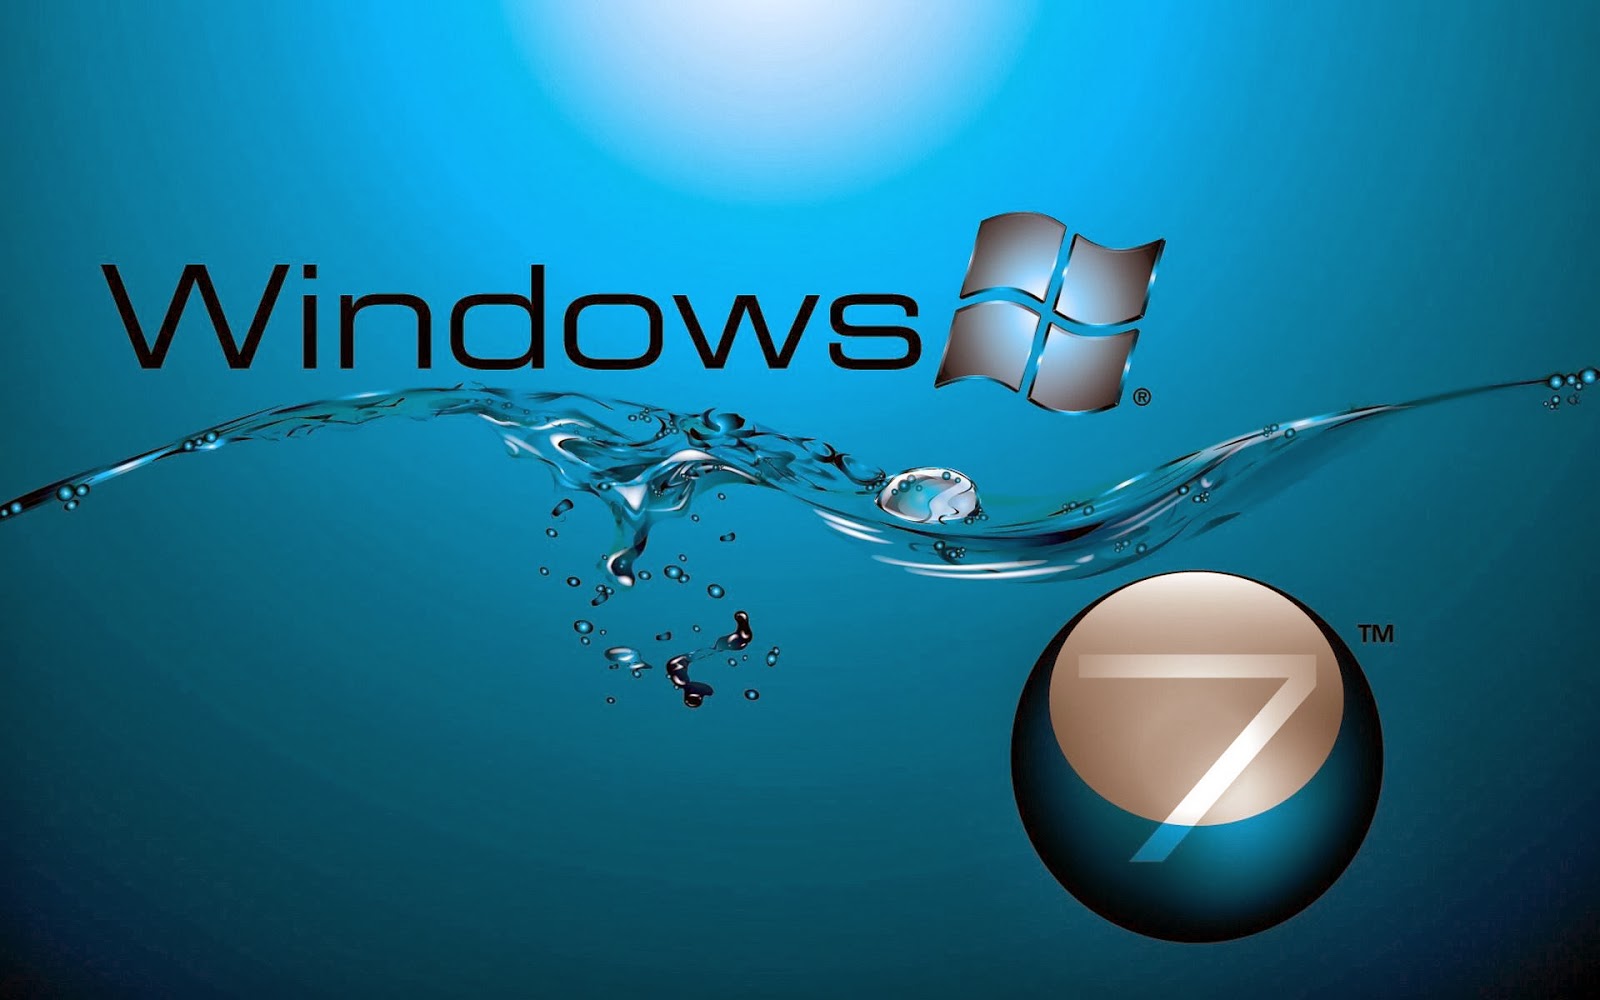 Windows 7 professional wallpapers | Hindi Motivational Quotes | HD ...